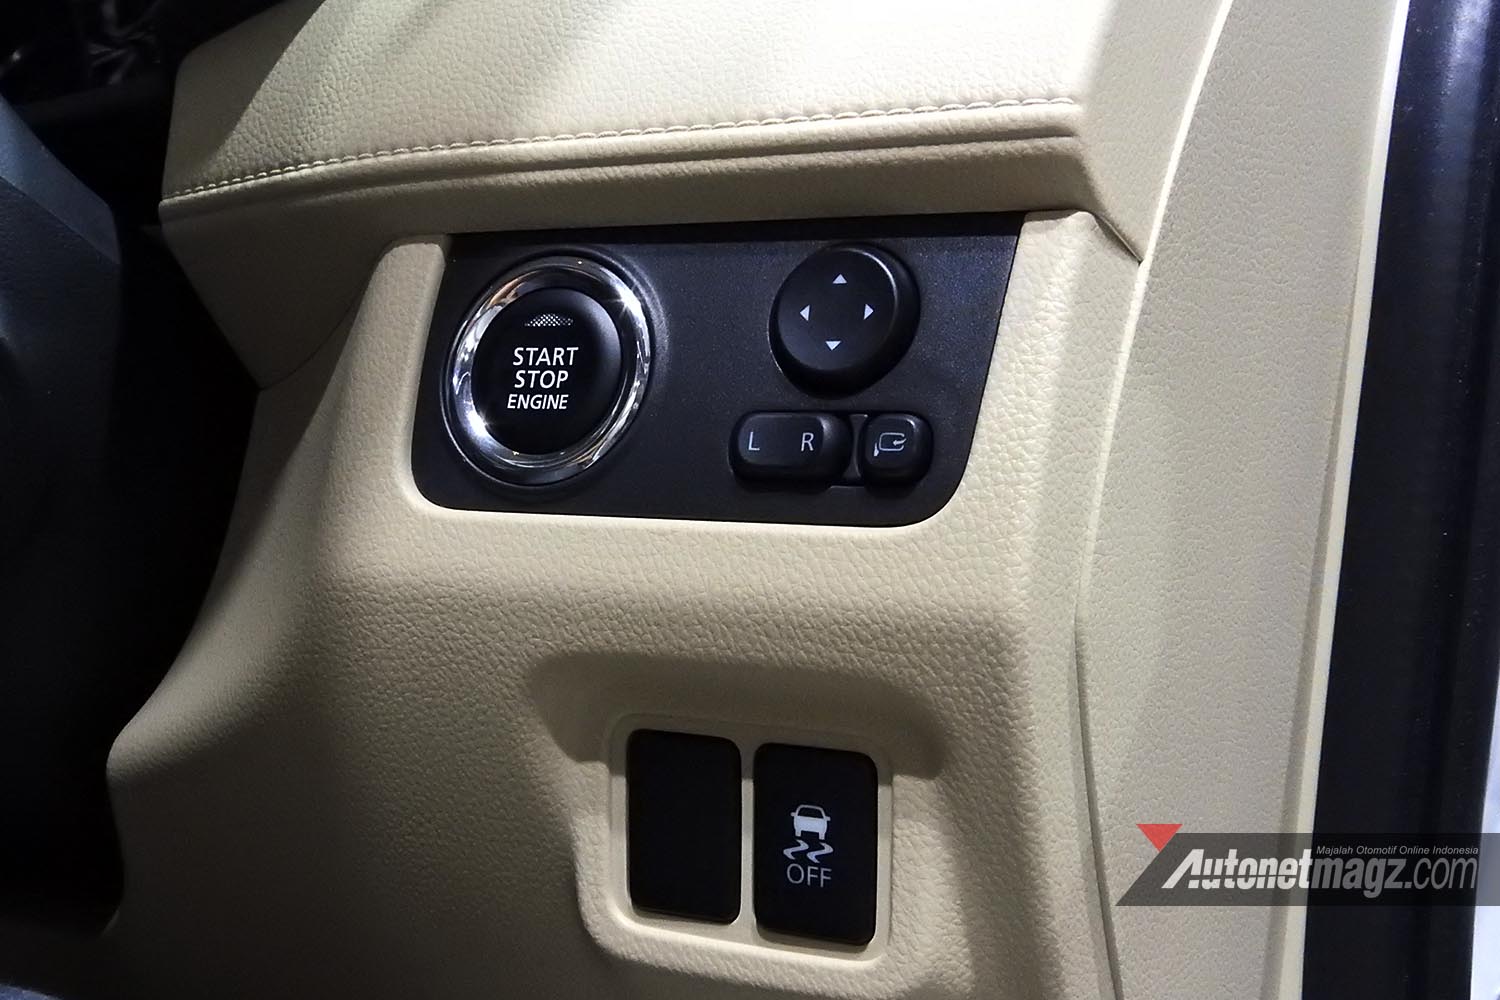 Mitsubishi, start stop engine button tombol dan stability control mitsubishi xpander giias 2017 indonesia: First Impression Review Mitsubishi Xpander 2017 Indonesia